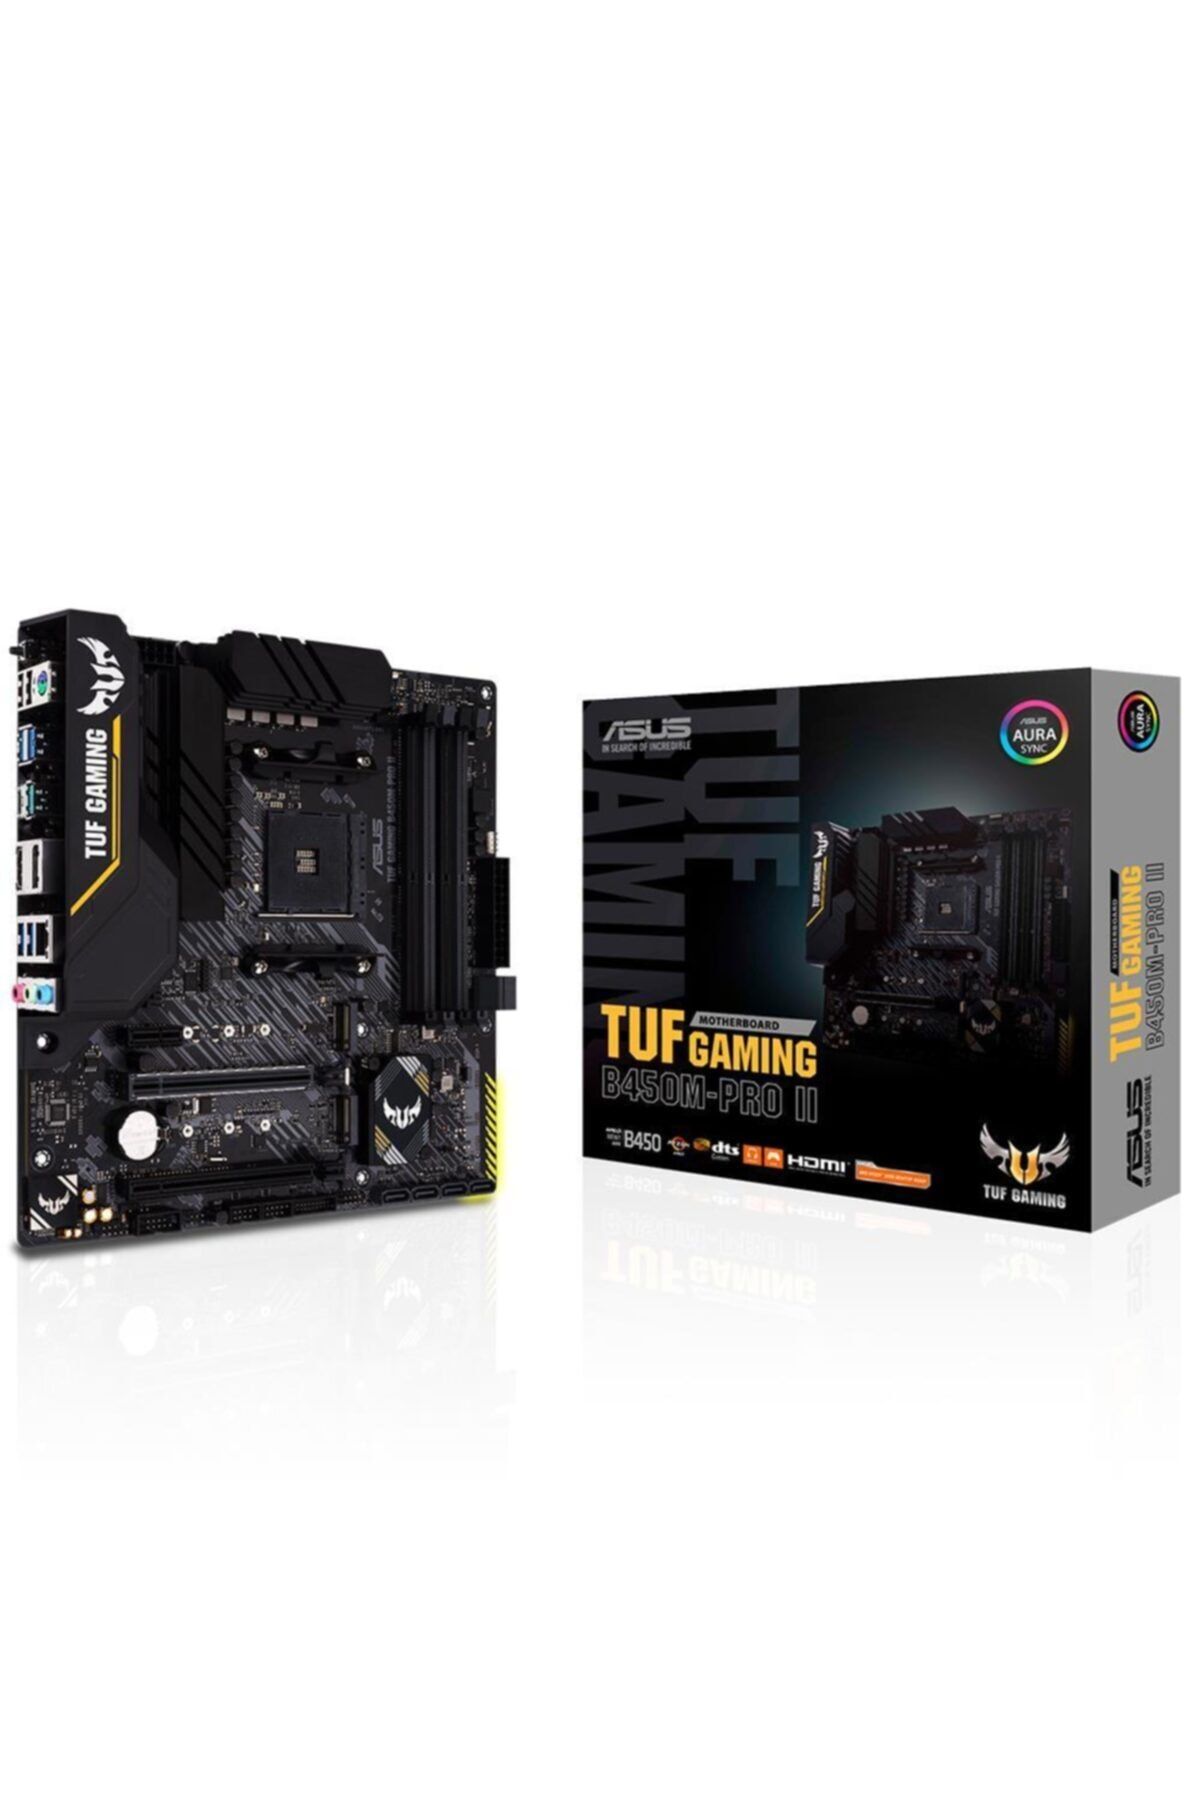 ASUS Tuf B450m-pro Iı Bios Flashback Gaming Amd B450 Am4 Ddr4 4400 Matx Anakart